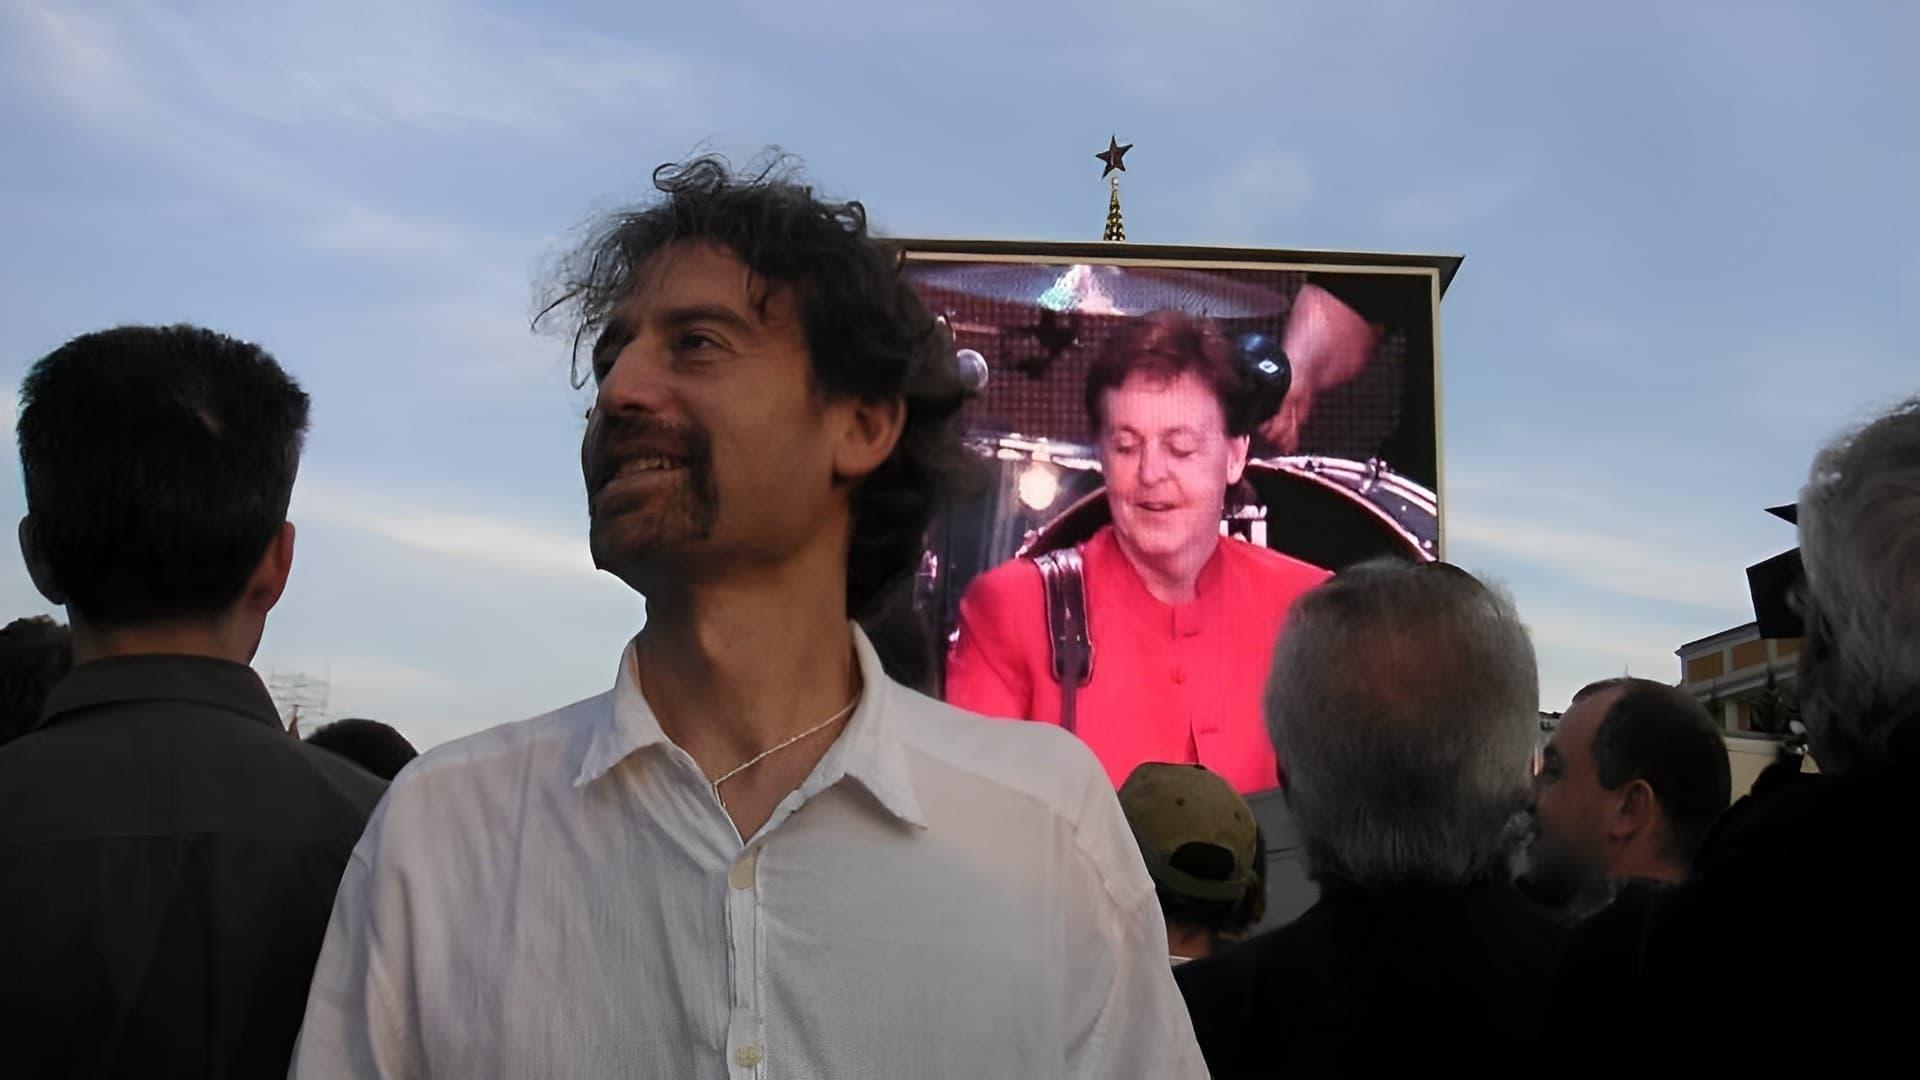 Paul McCartney: In Red Square backdrop